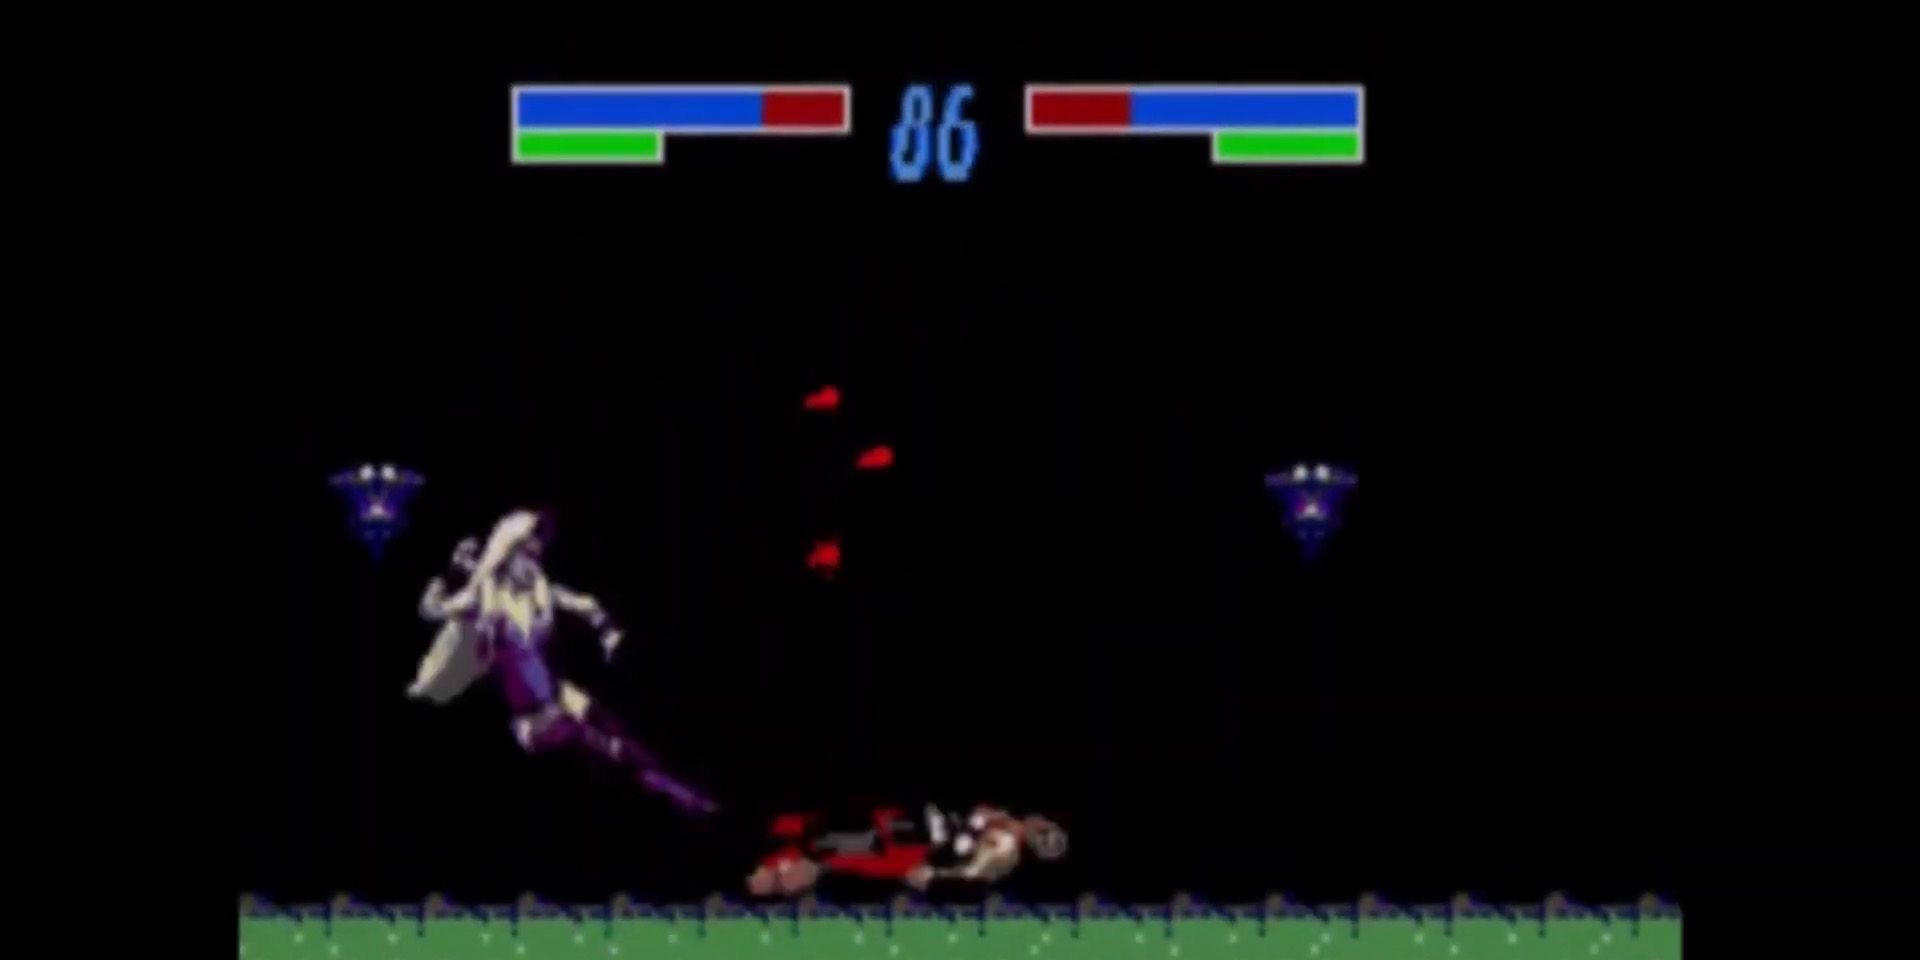 Mortal Kombat 3 for the Master System